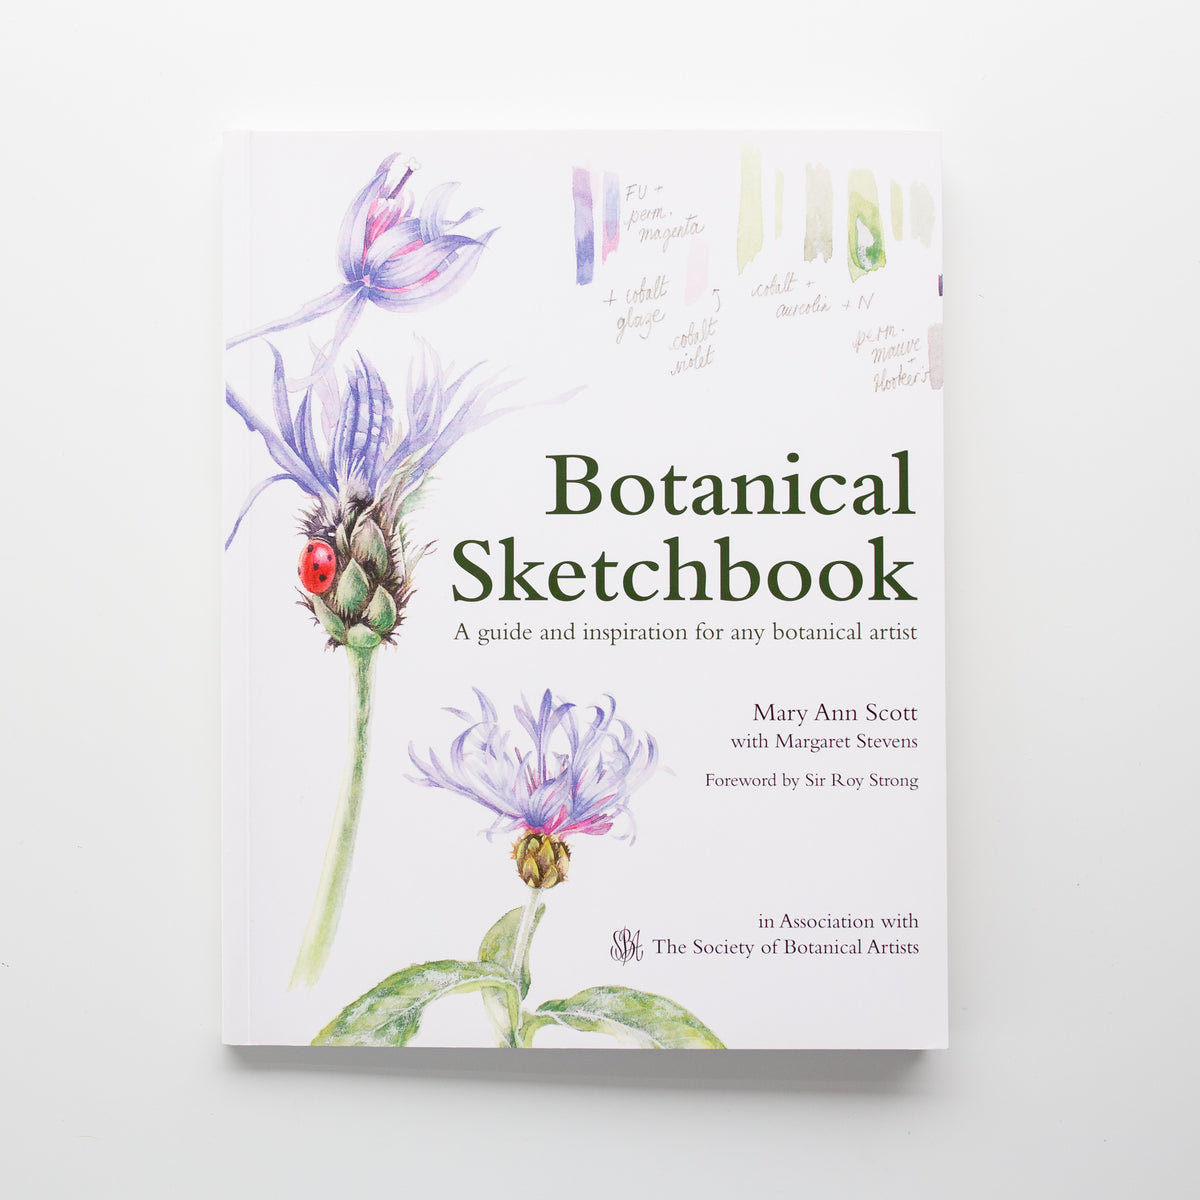 Botanical Sketchbook' by Mary Ann Scott